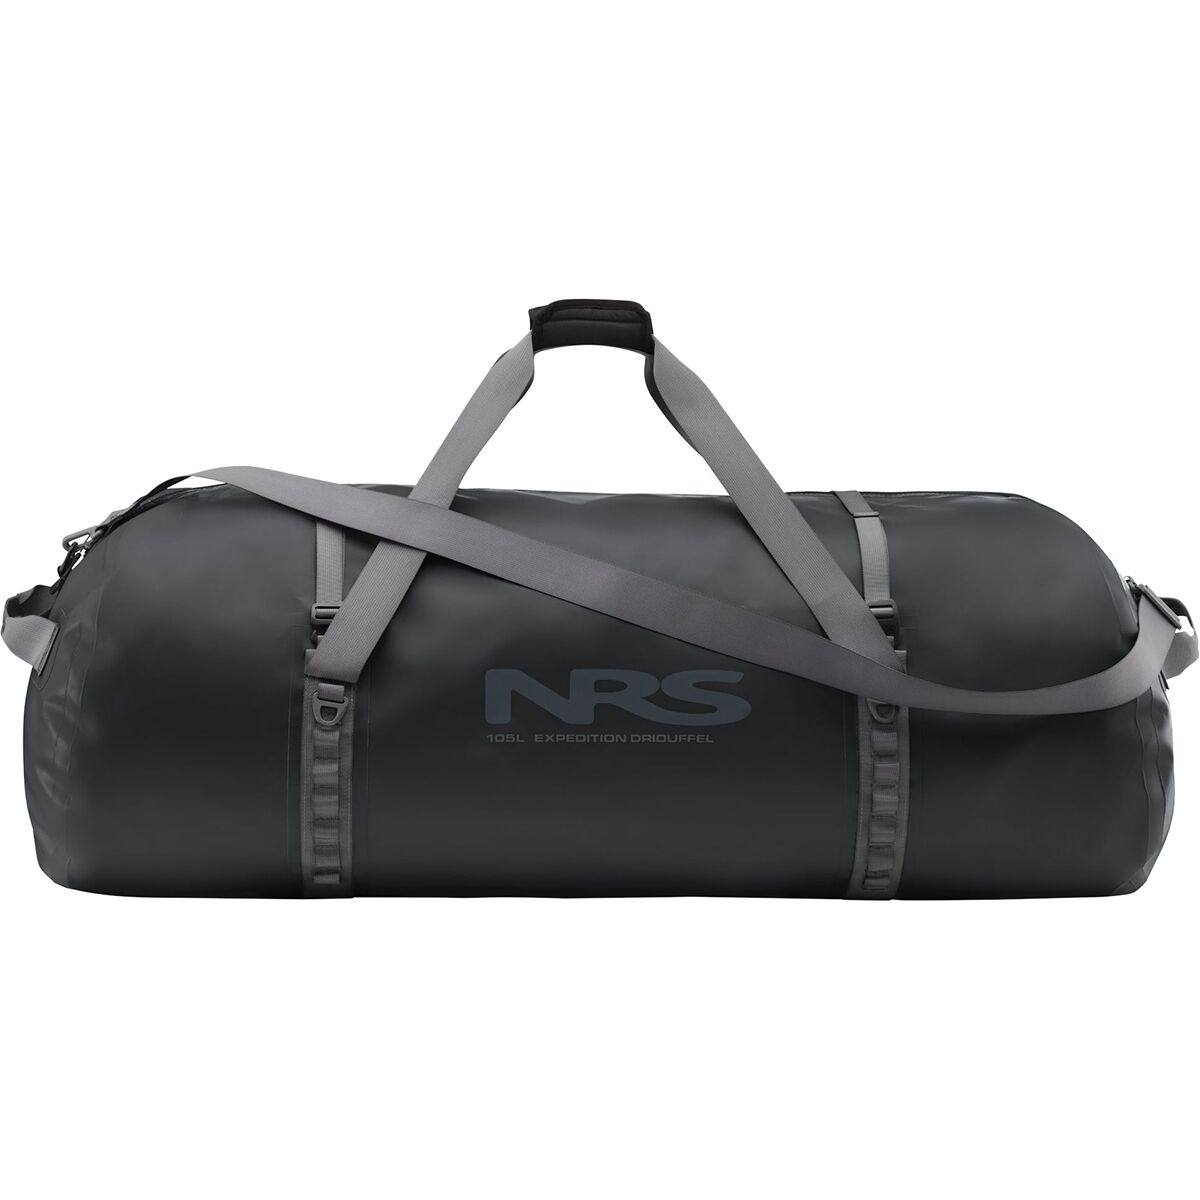 NRS Expedition DriDuffel Dry Bag 105L